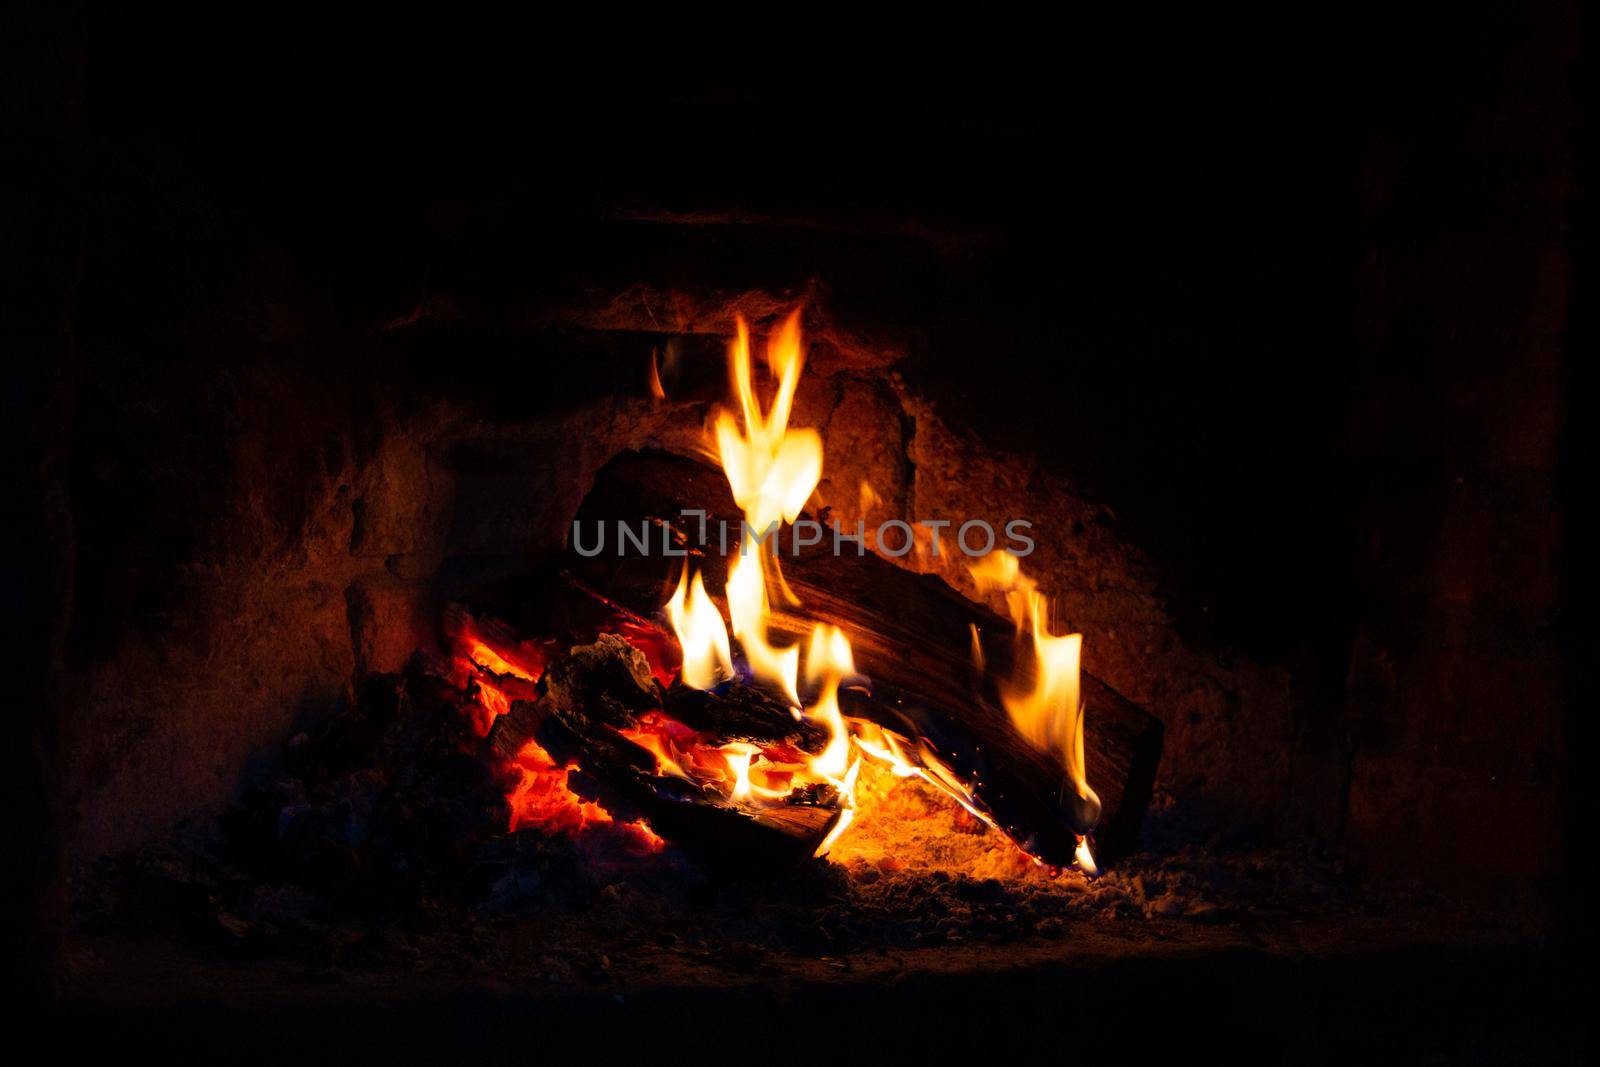 burning logs in the fireplace by GabrielaBertolini